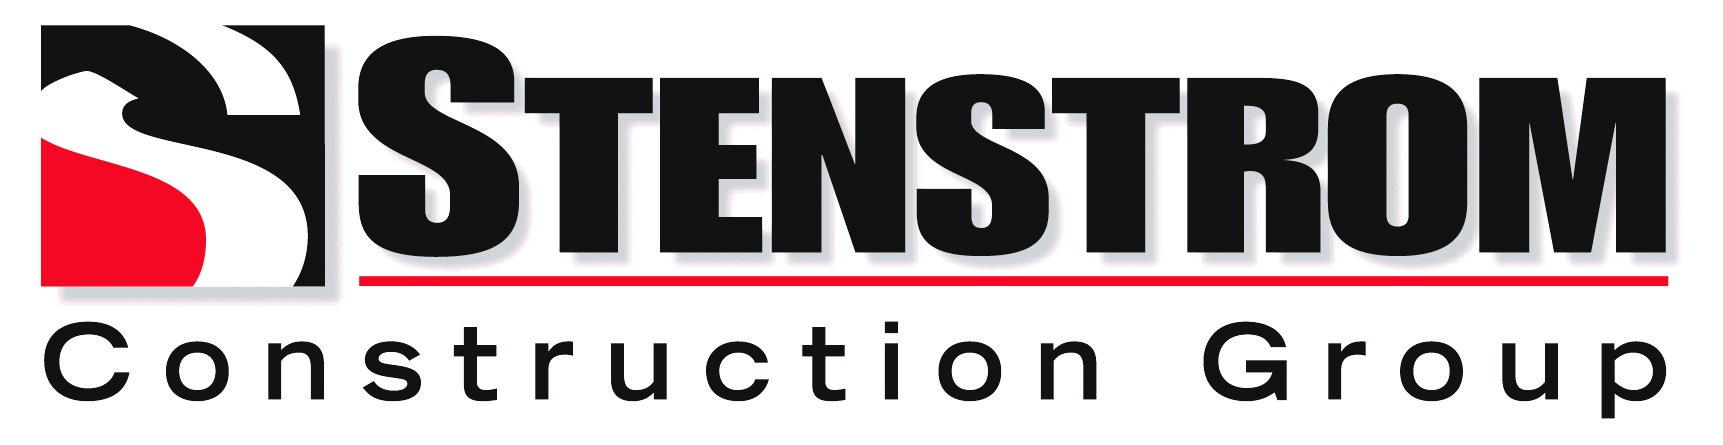 Stenstrom Construction Group